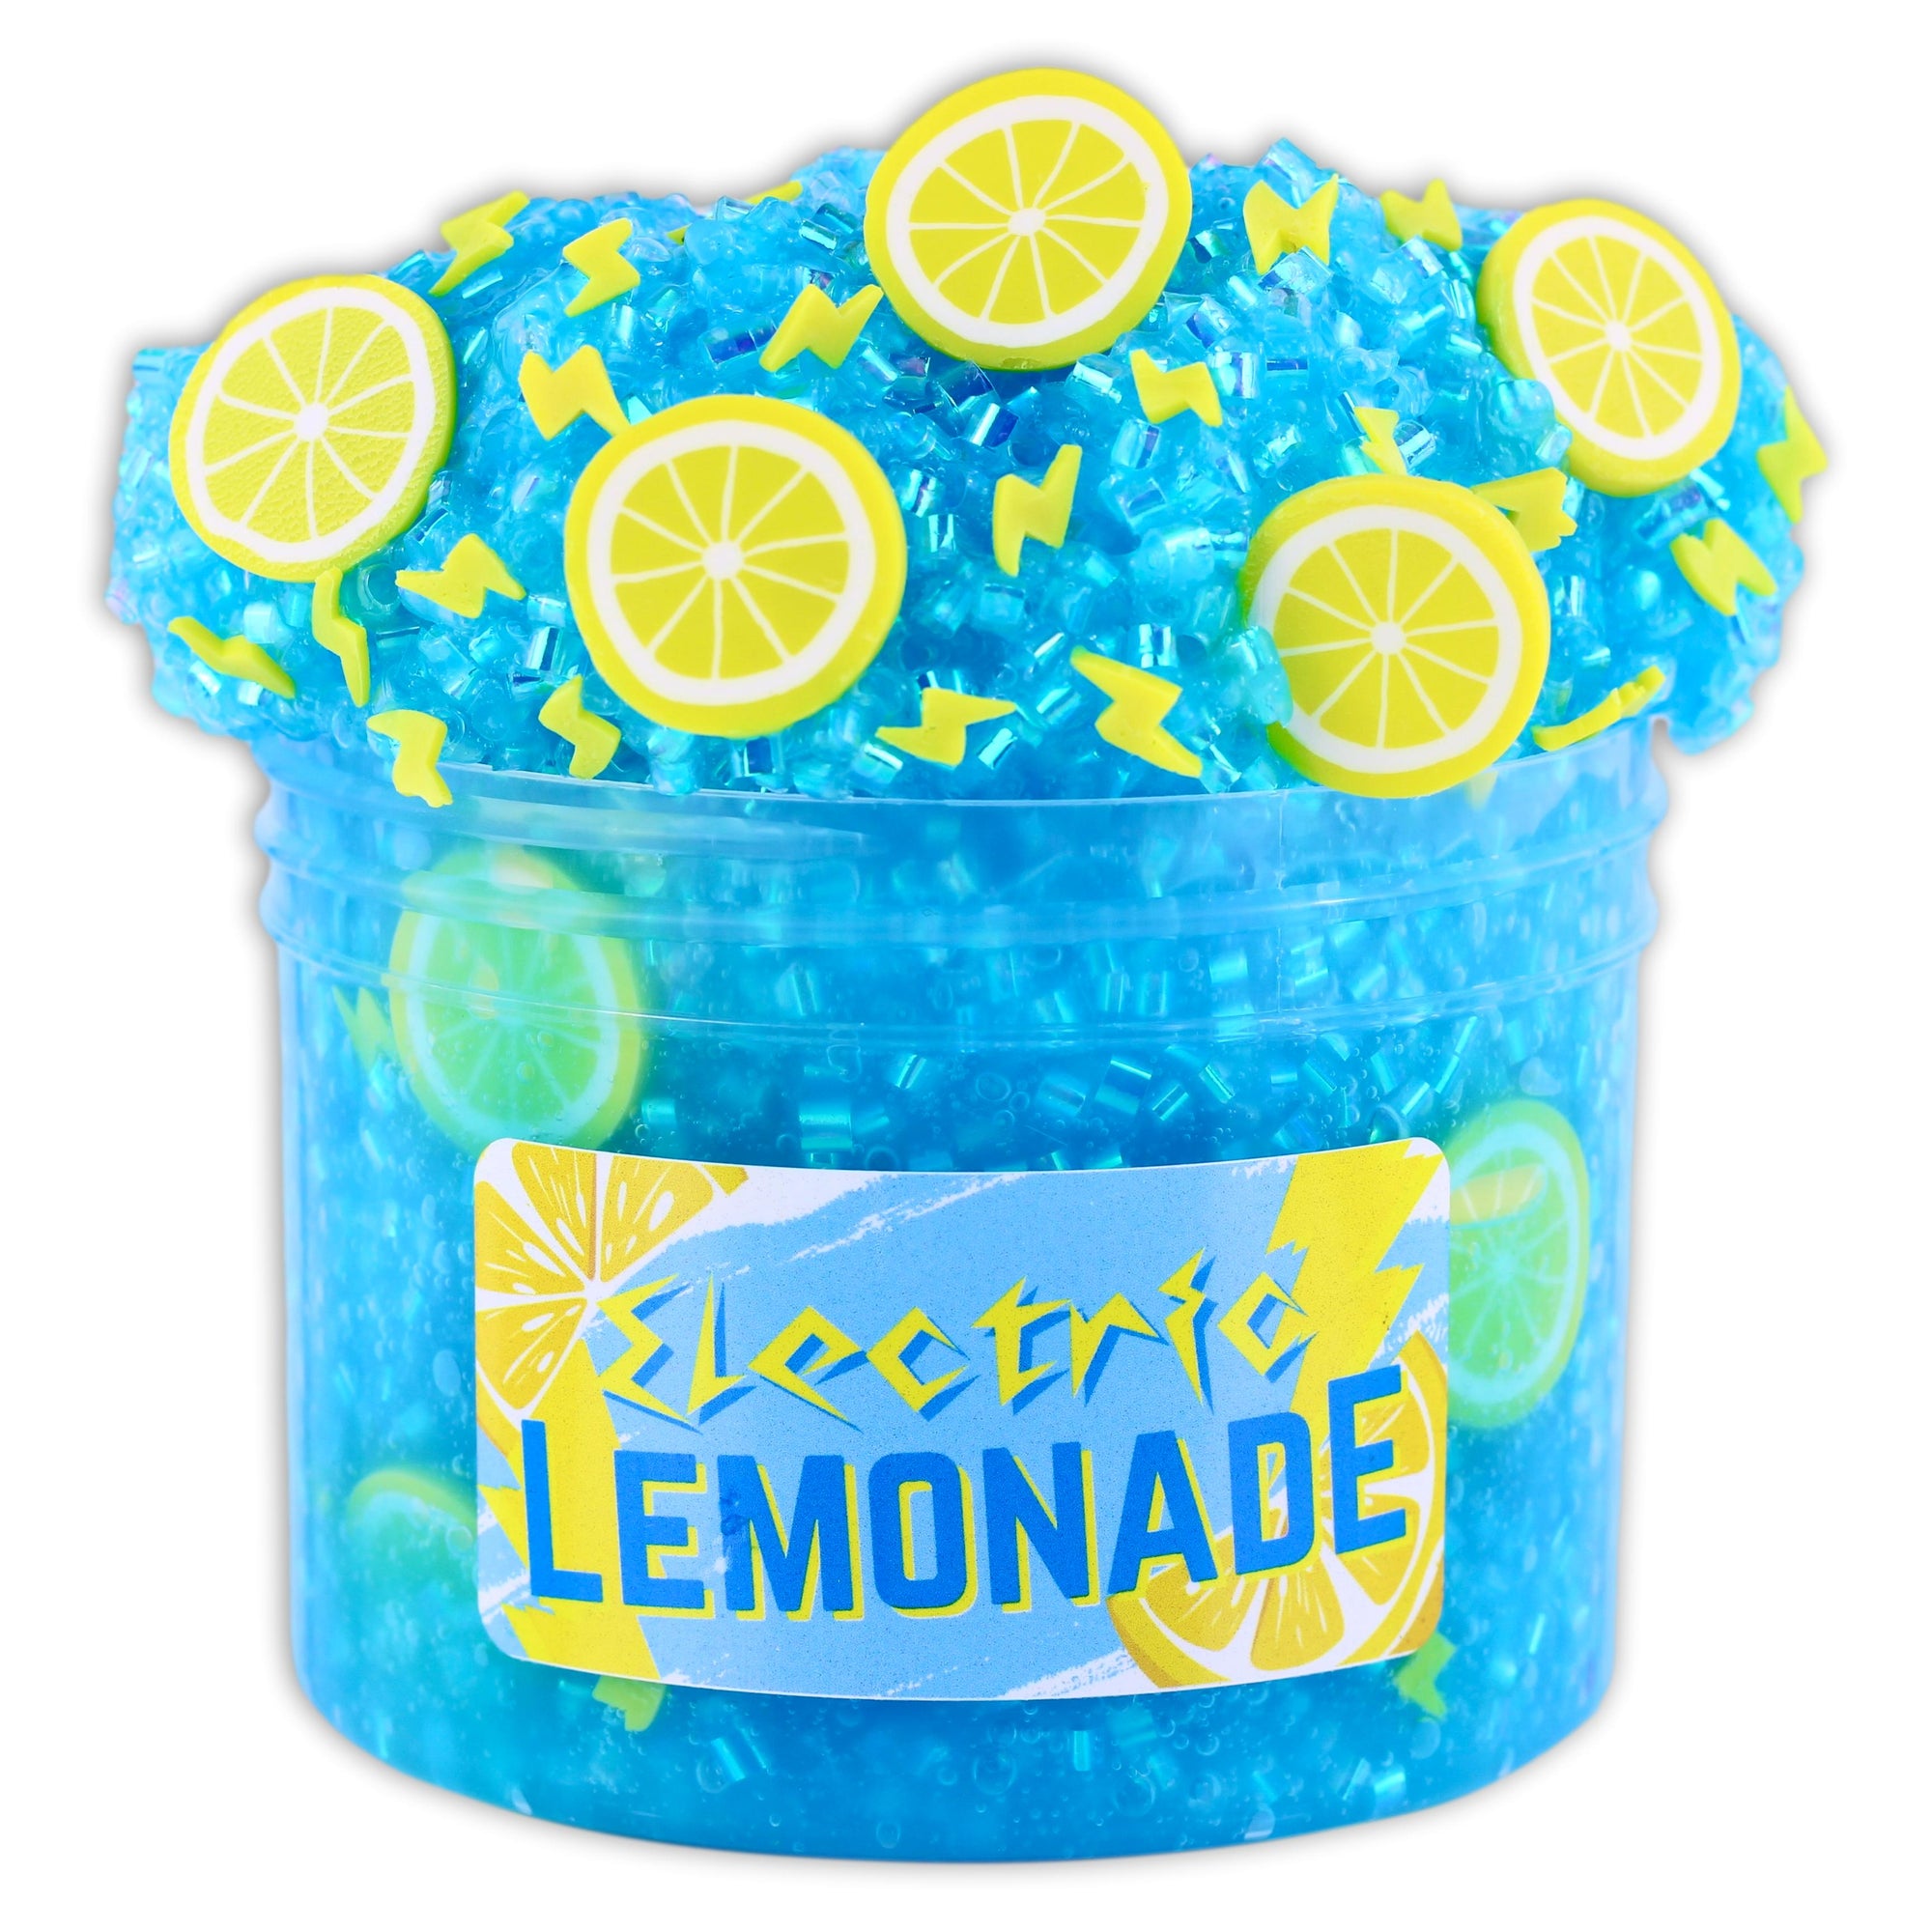 Electric Blue Lemonade – EZ-Gelatin Shot Products